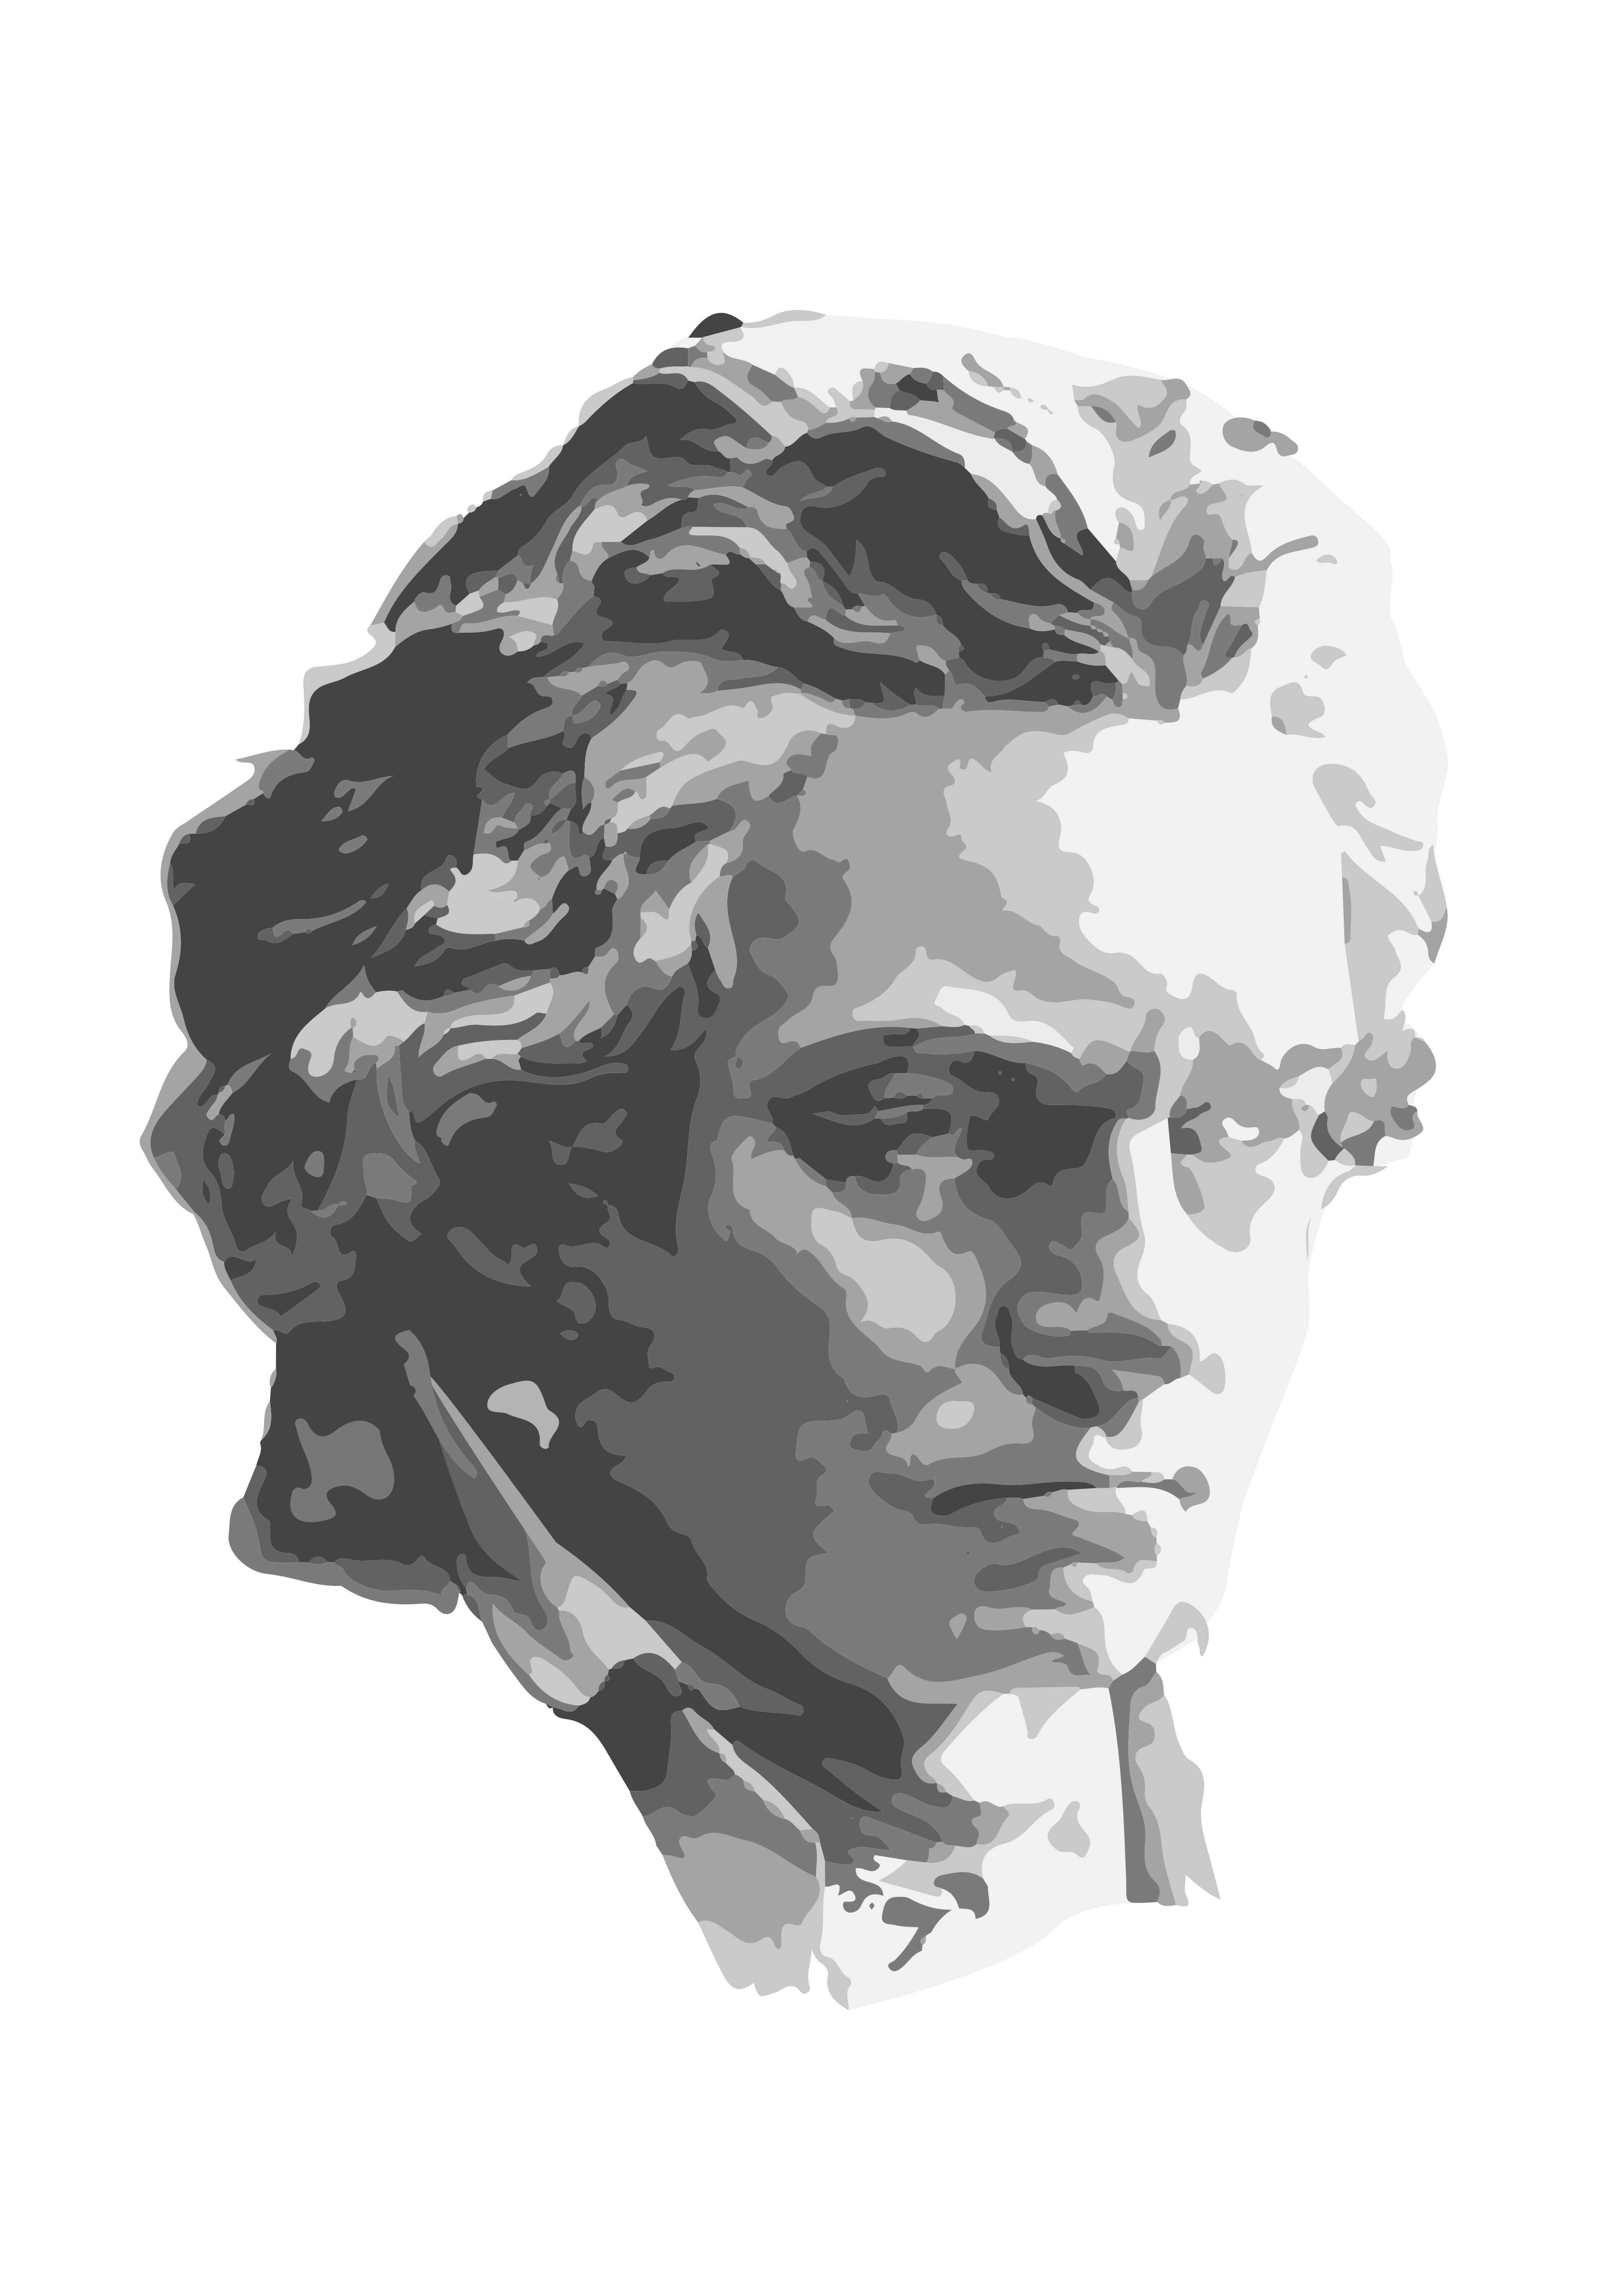 Zur Kurz kommt Beethoven in den Eckpunkten